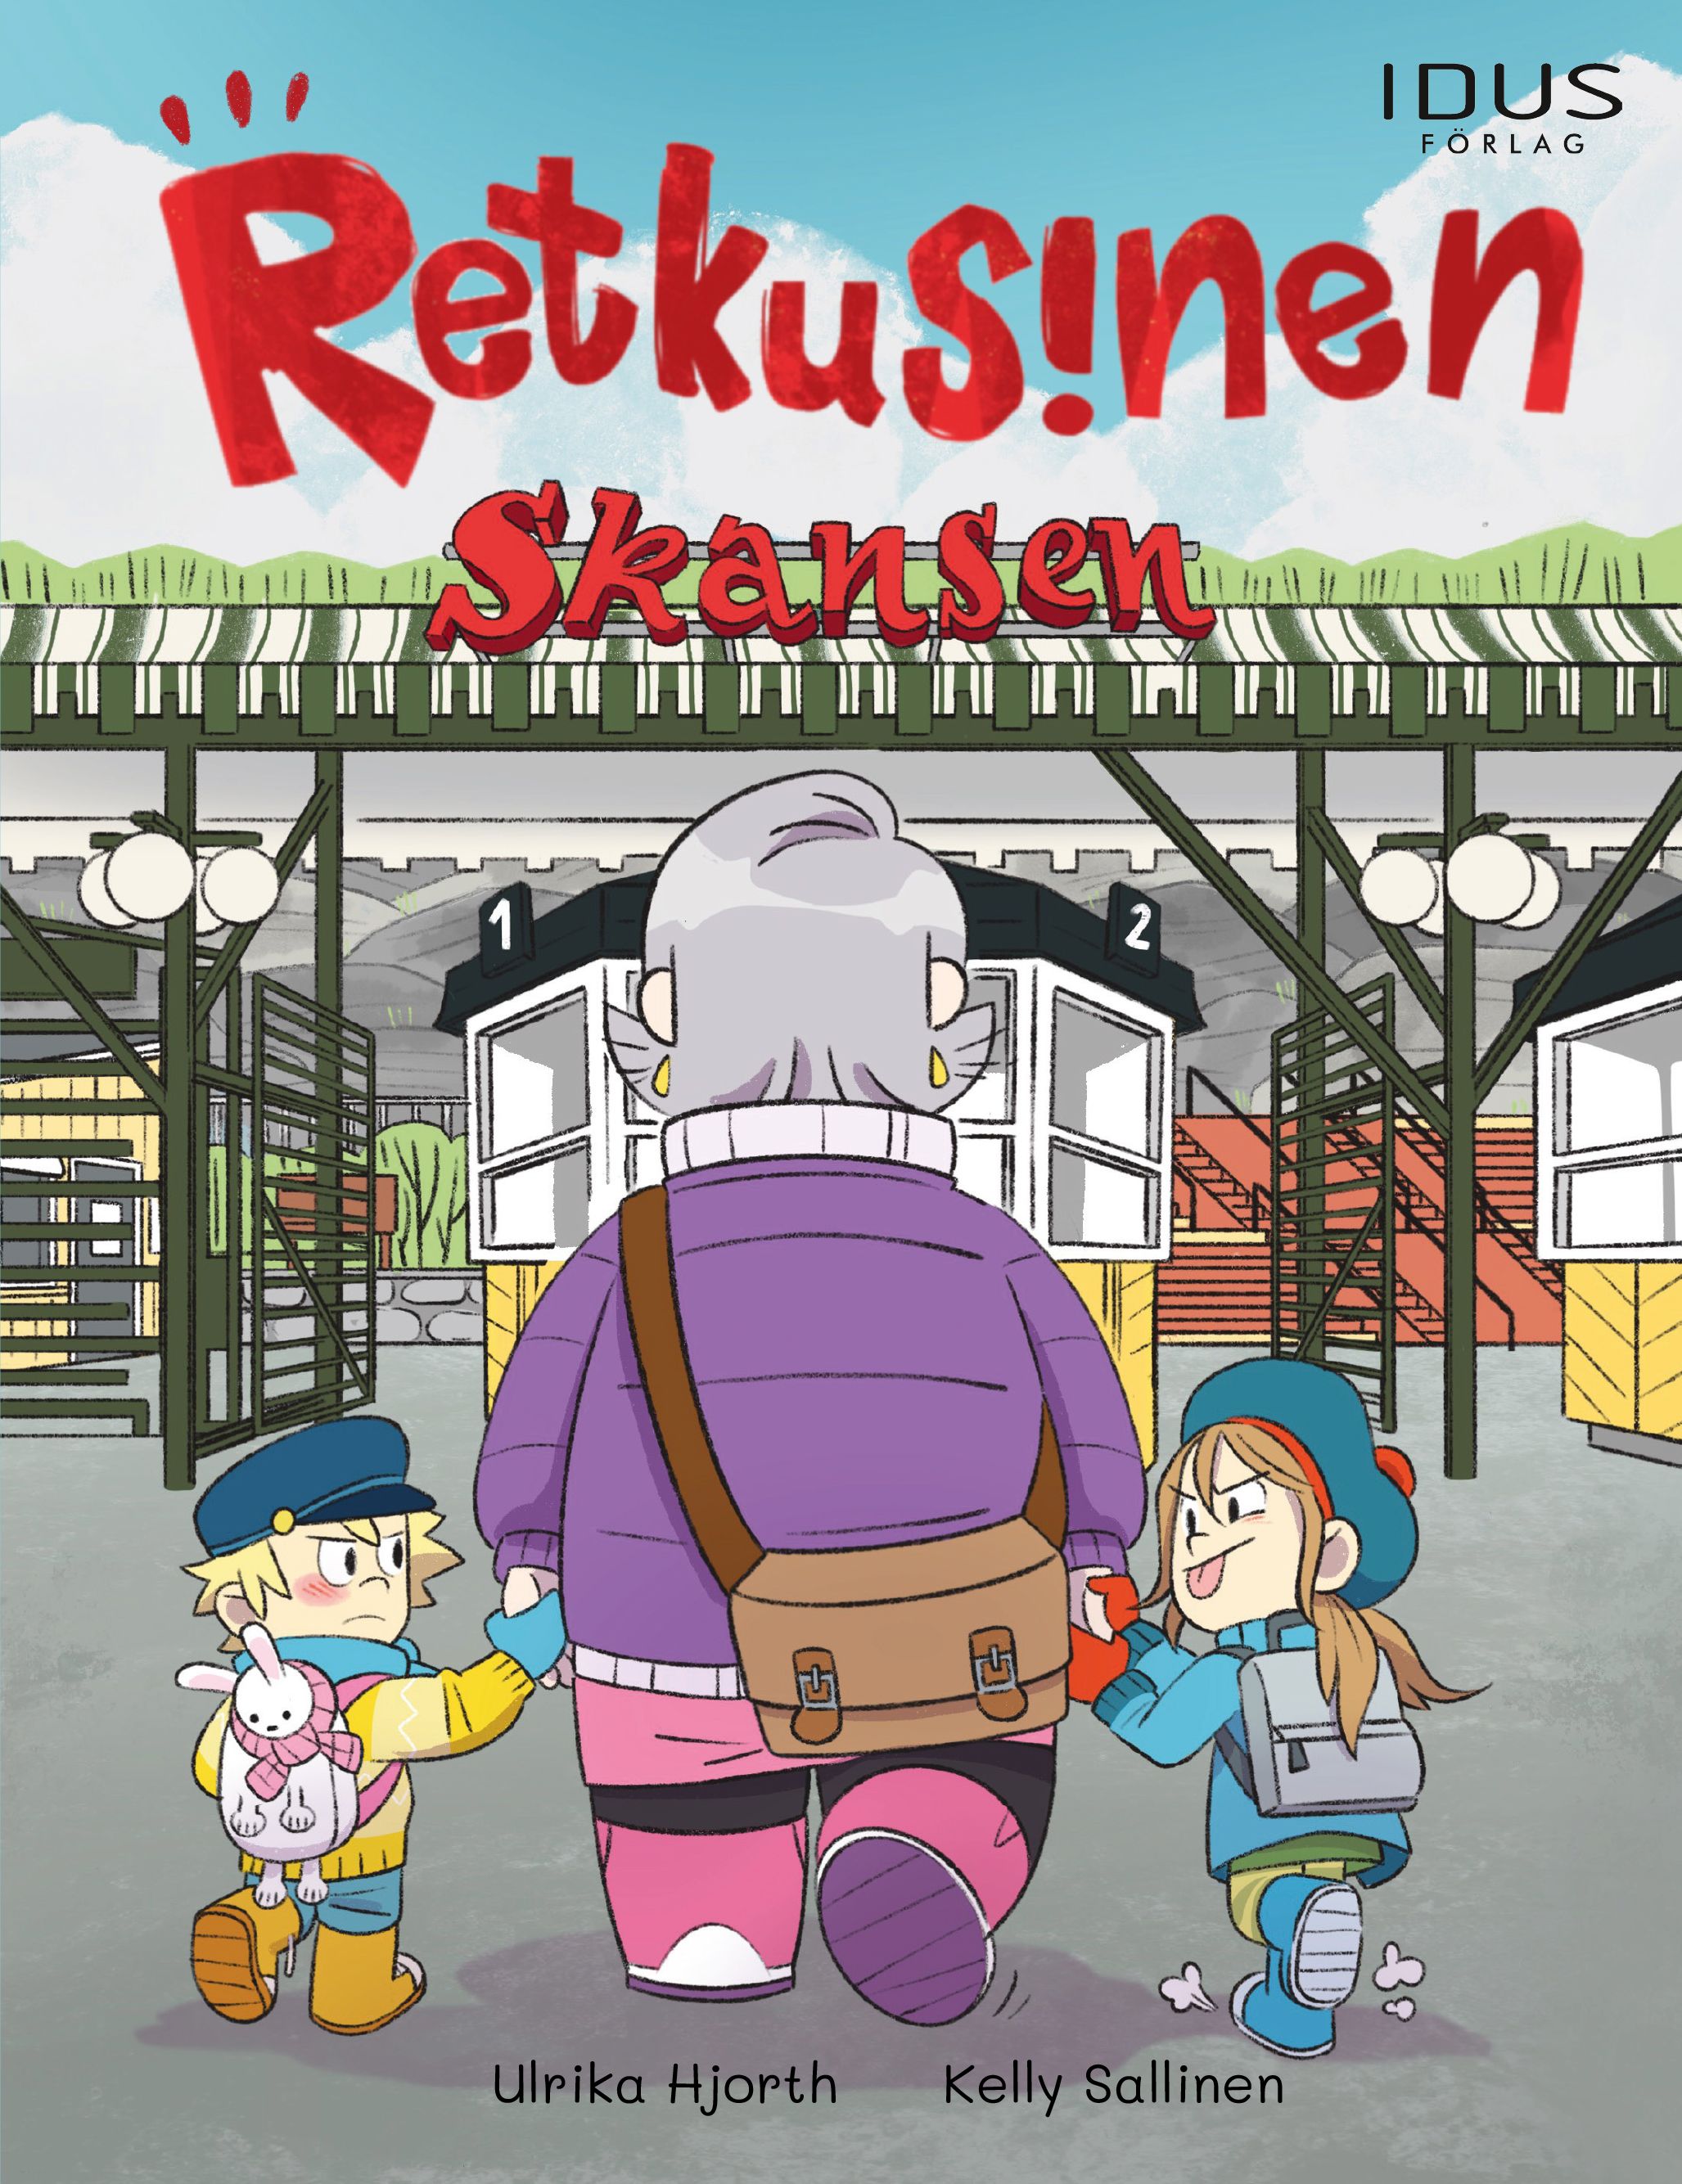 Retkusinen, eBook by Ulrika Hjorth